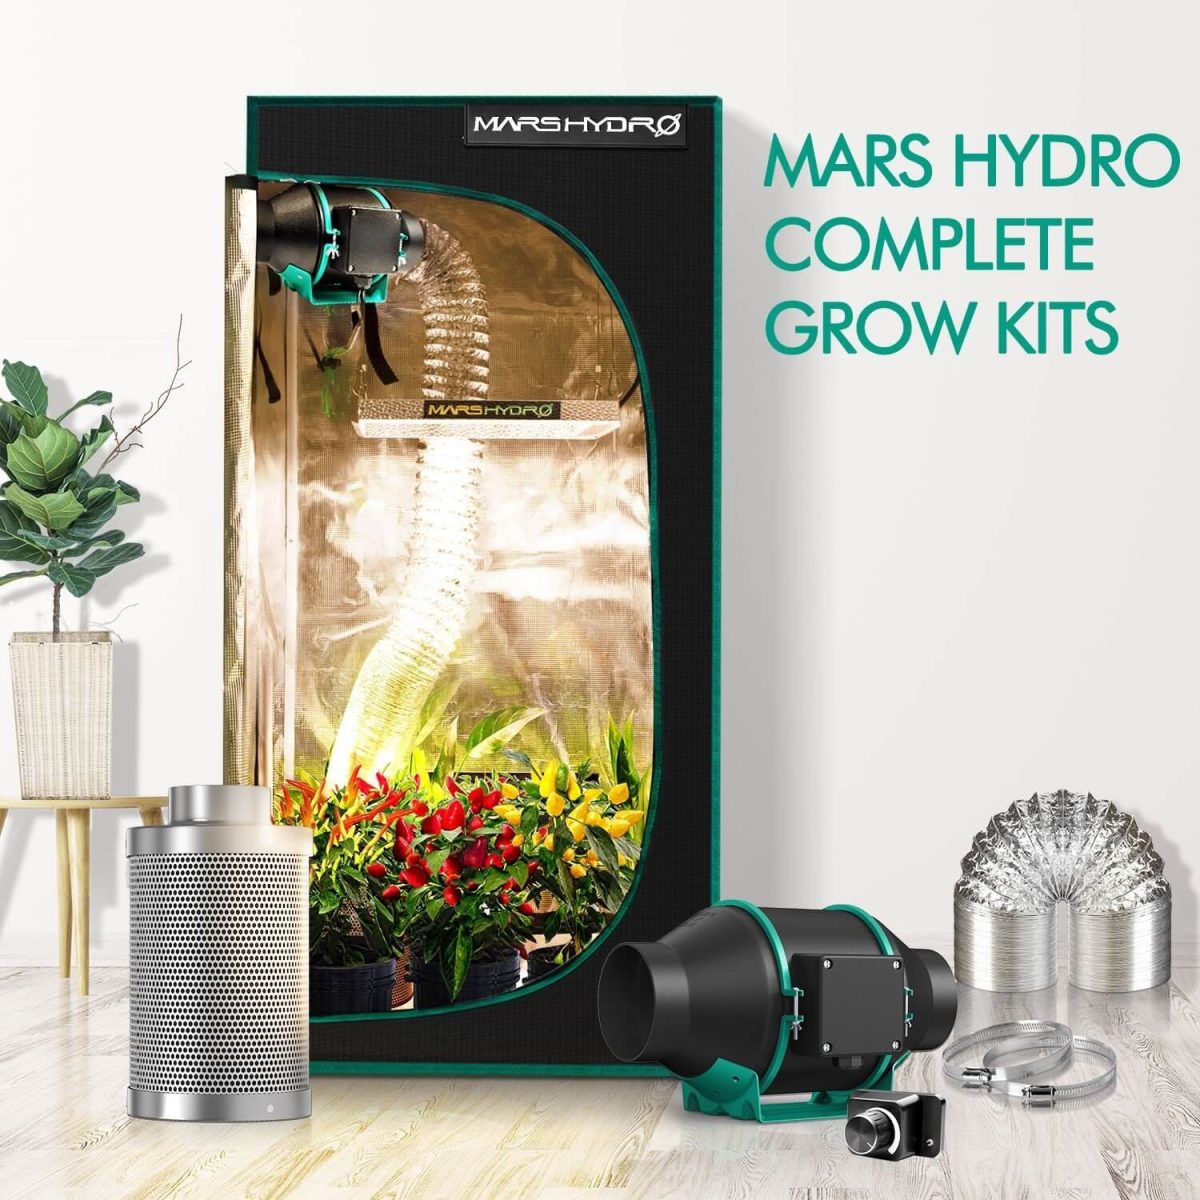 Mars Hydro 2x2 complete grow tent kits, the best beginner grow tent kits